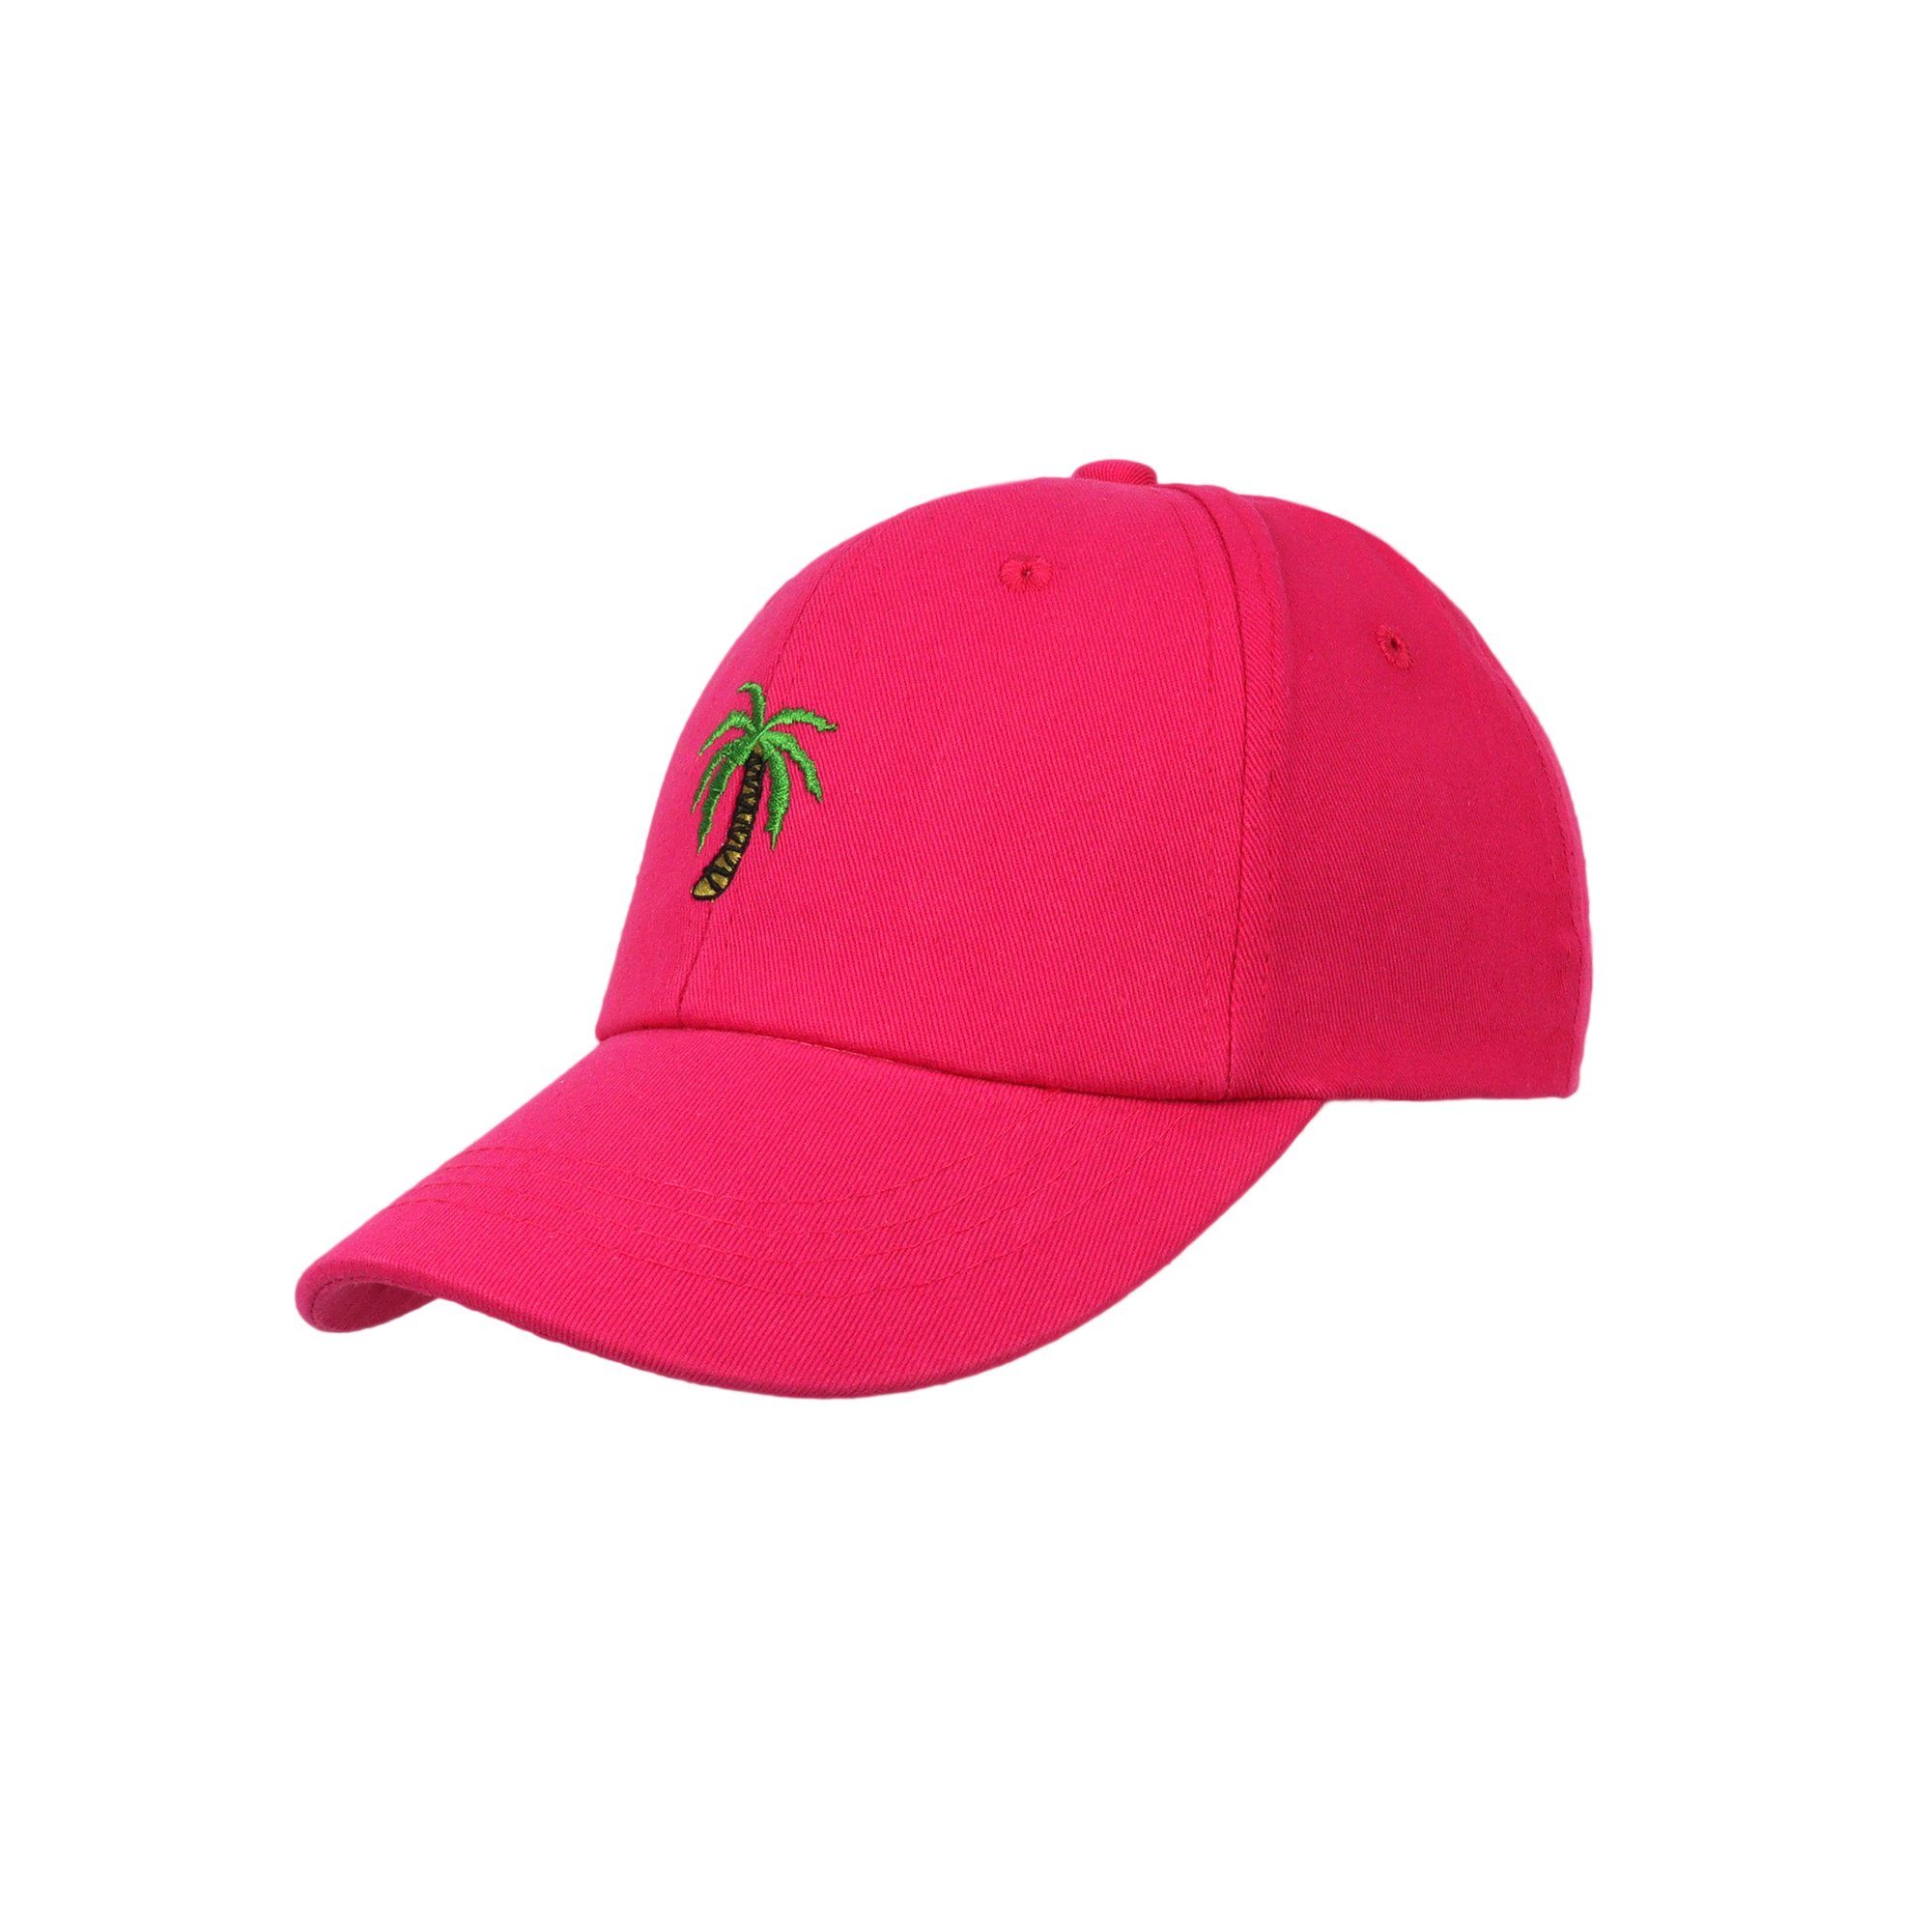 ZEBRO Baseball Cap Kinder Cap mit Belüftungslöcher pink